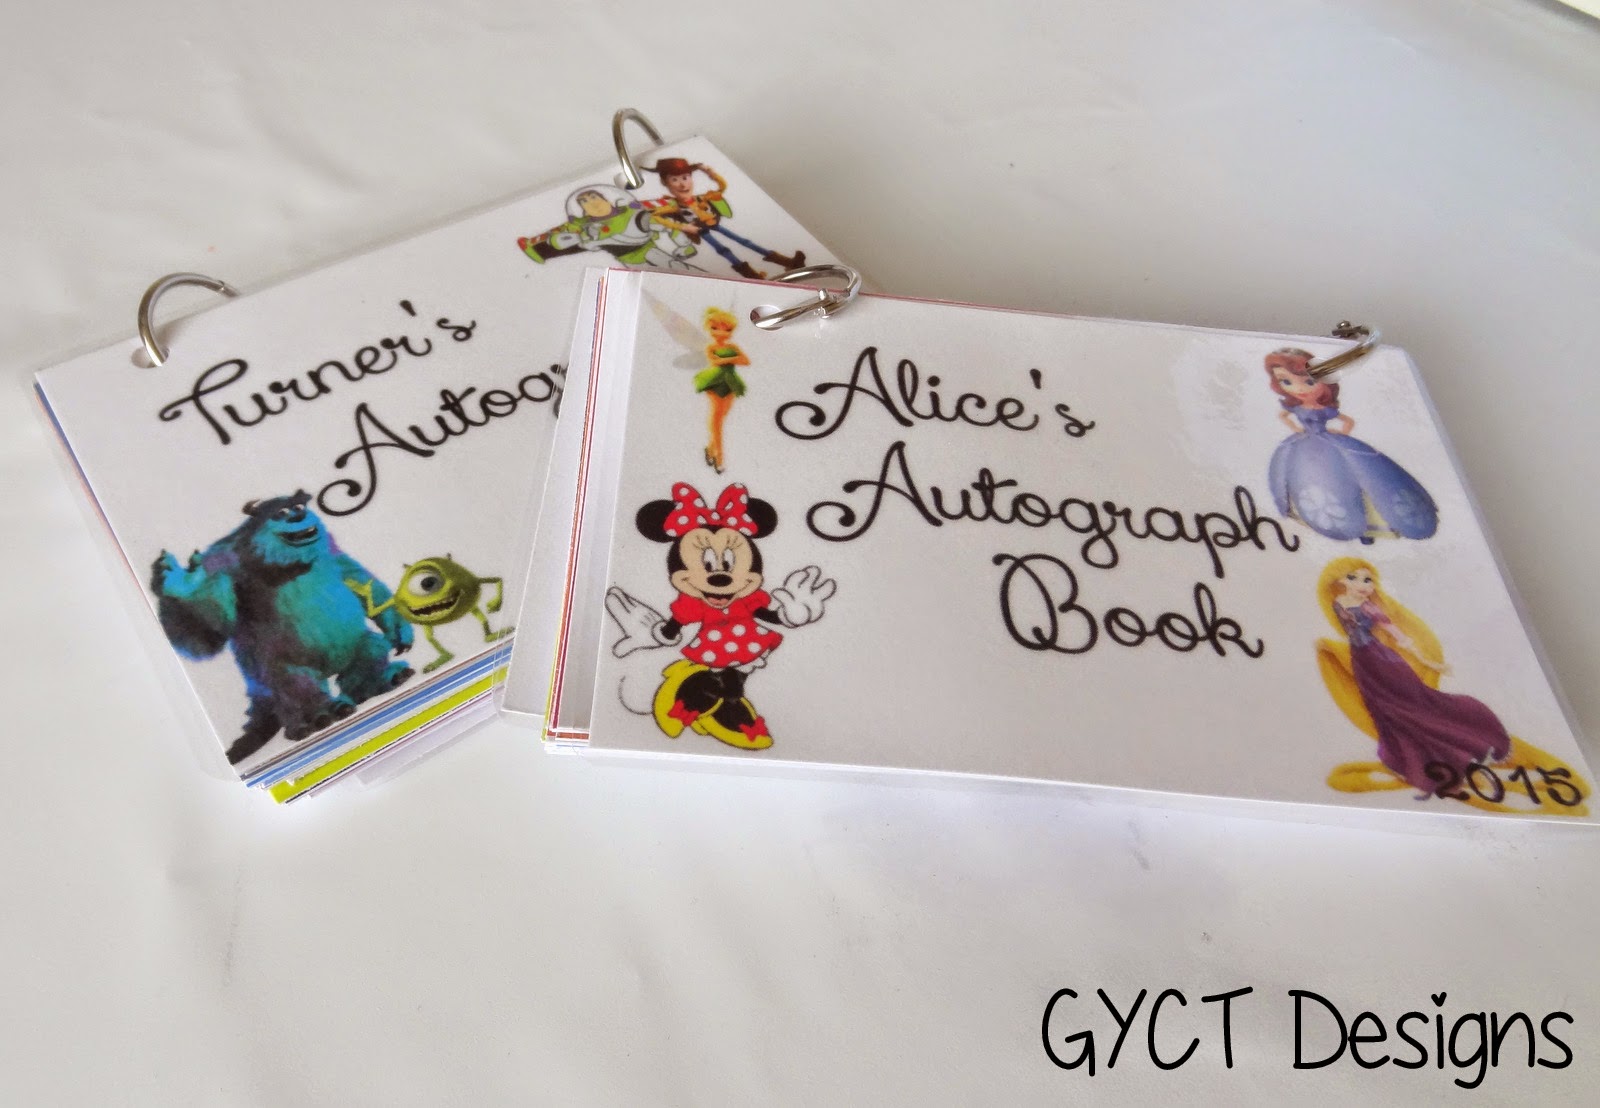 Disney Autograph Book Printable Pages – DIY Party Mom